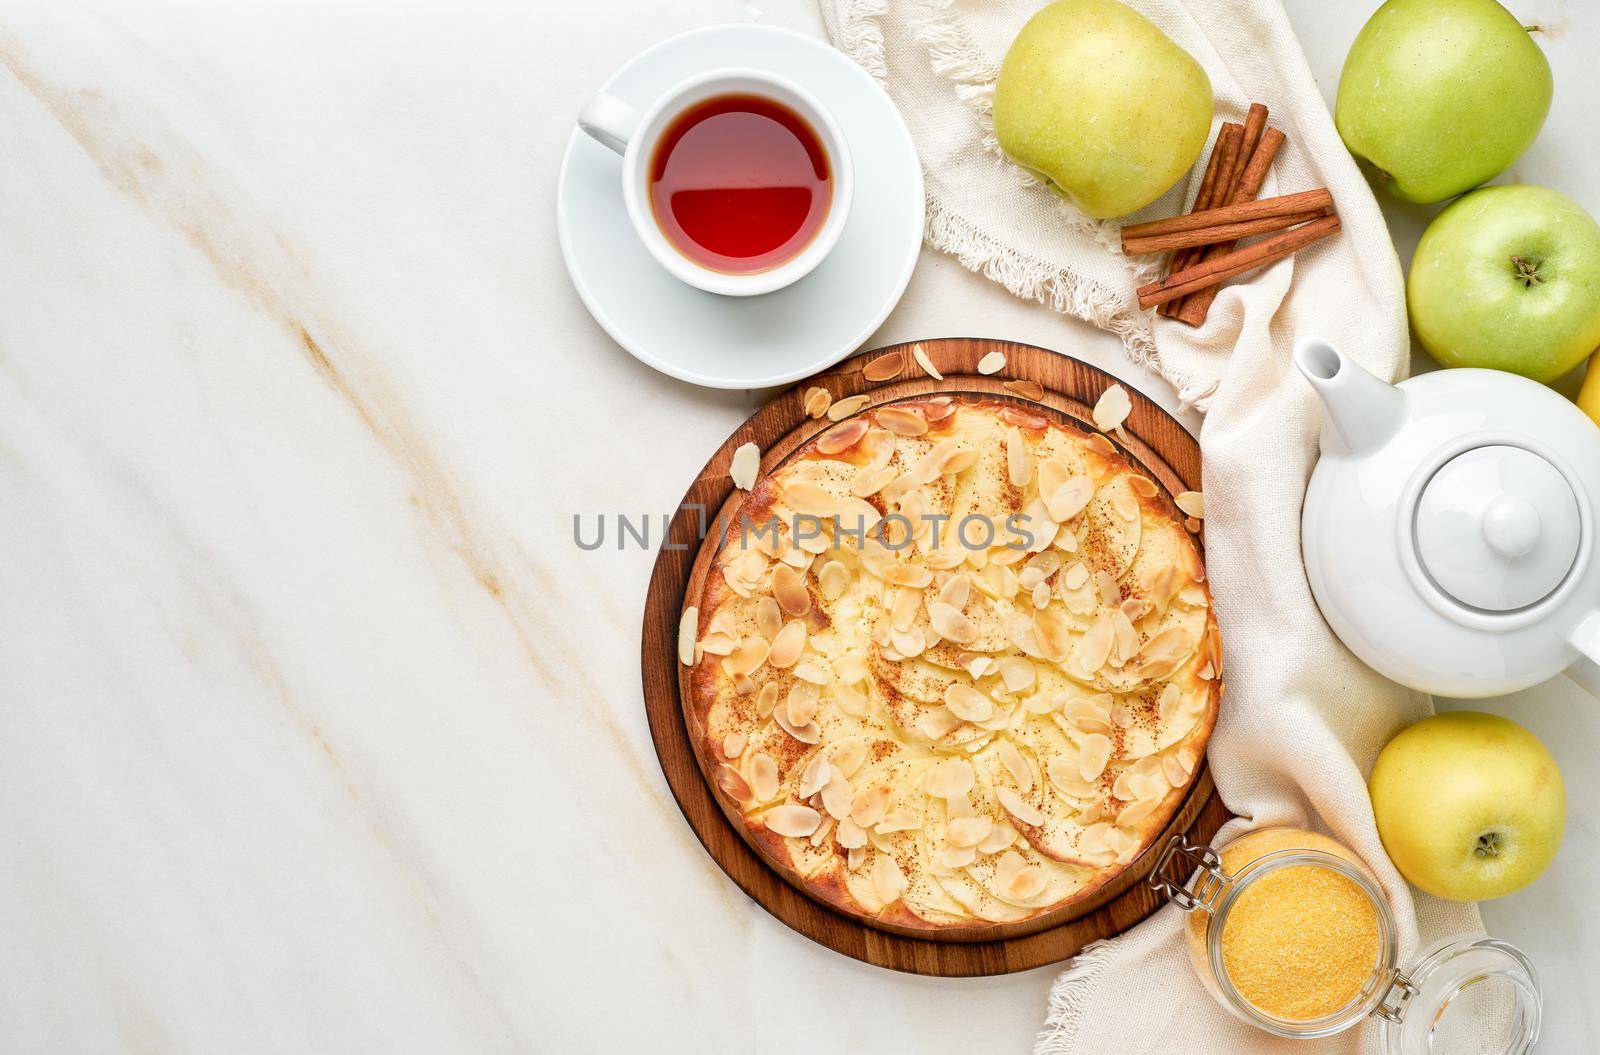 Cheesecake, apple pie, curd dessert with polenta, apples, almond flakes by NataBene